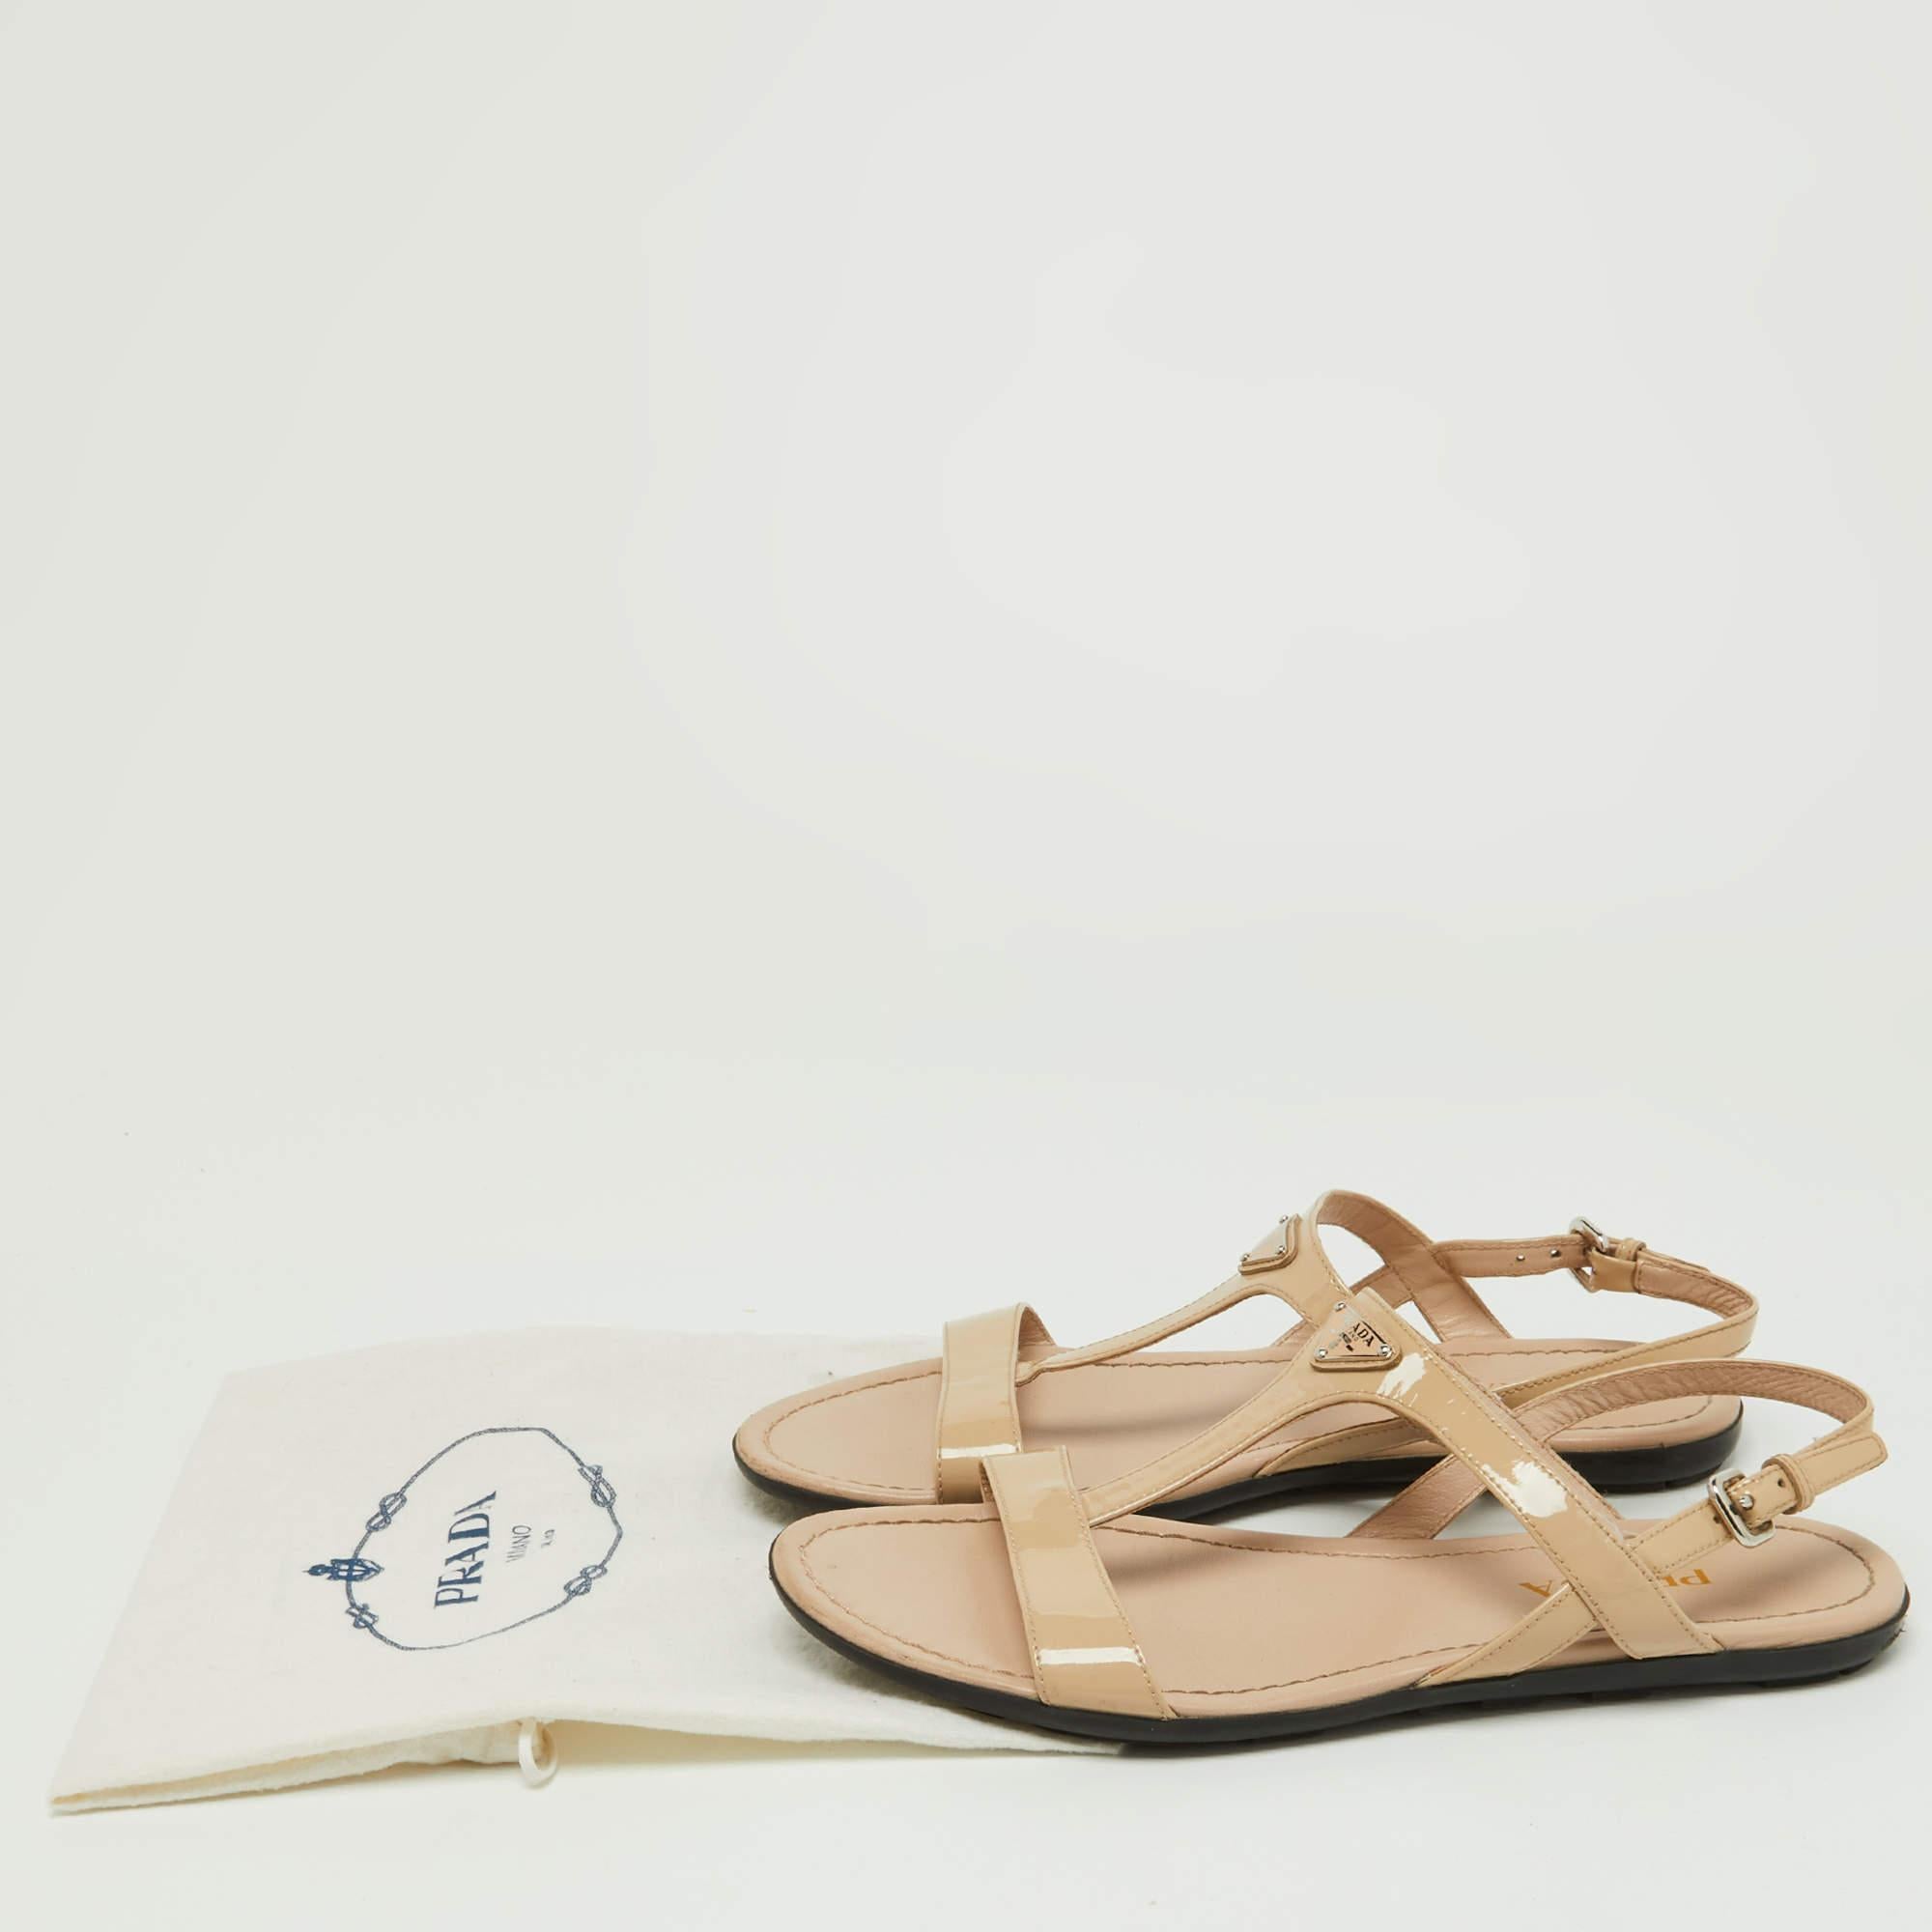 Prada Beige Patent Leather Flat Sandals Size 39 6